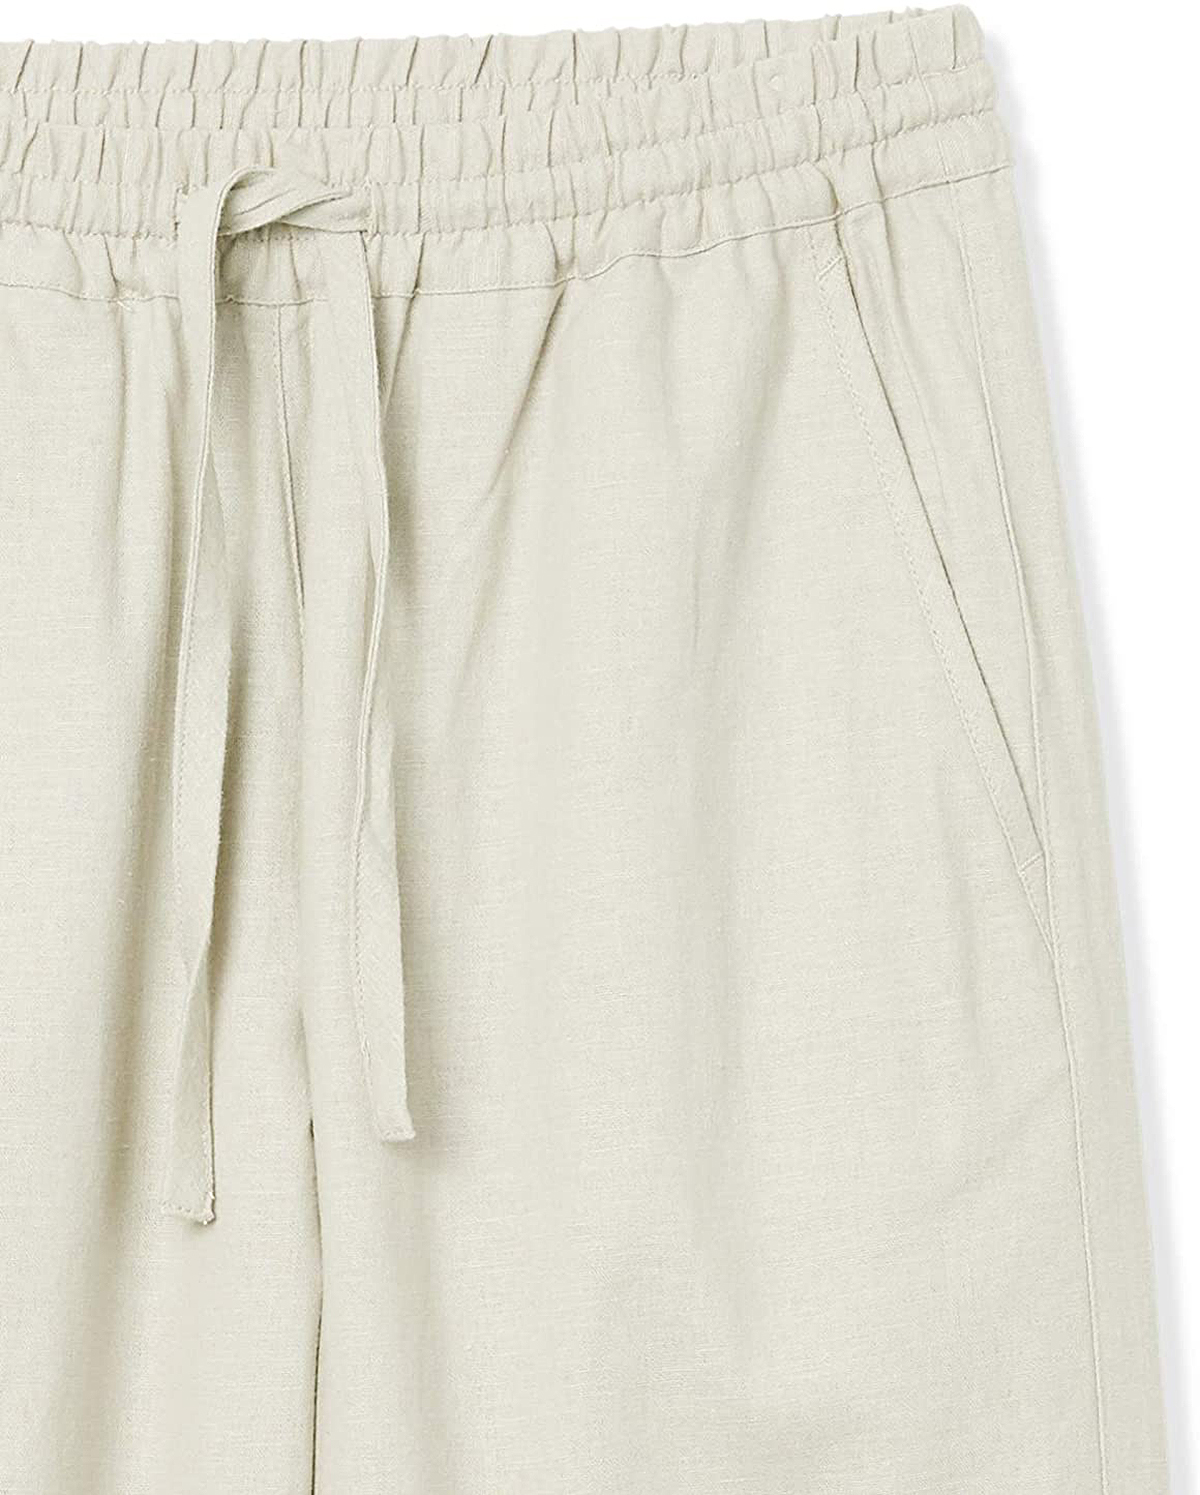 Linen-Blend Amazon Pants to Help You Channel Katie Holmes | UsWeekly